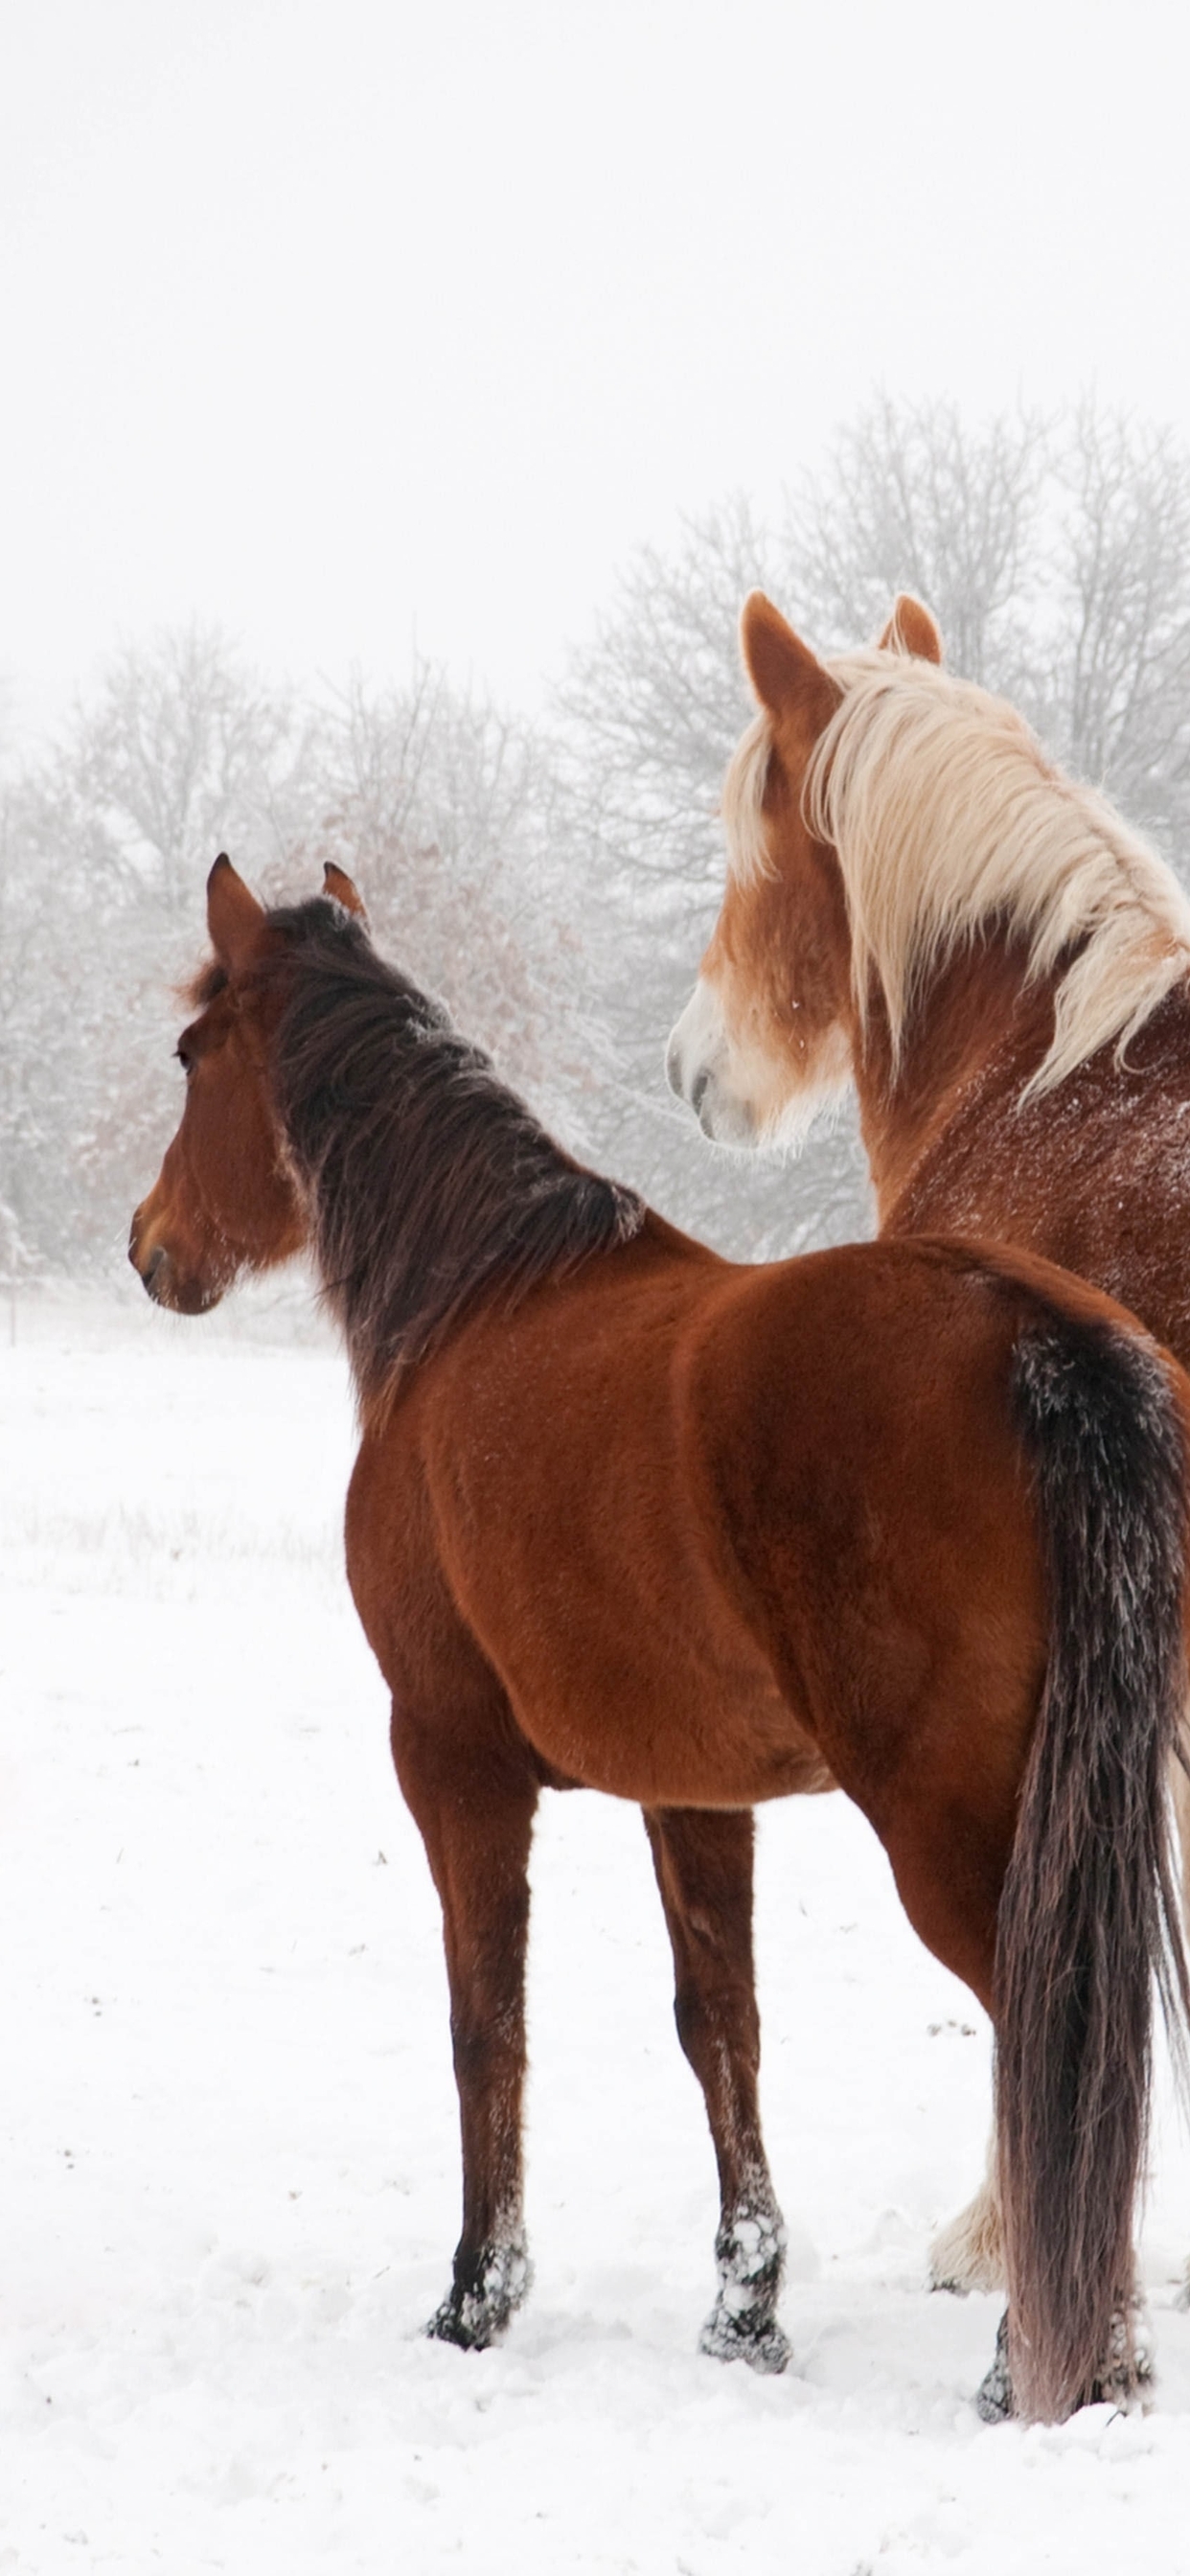 Image: Horse, winter, snow, couple